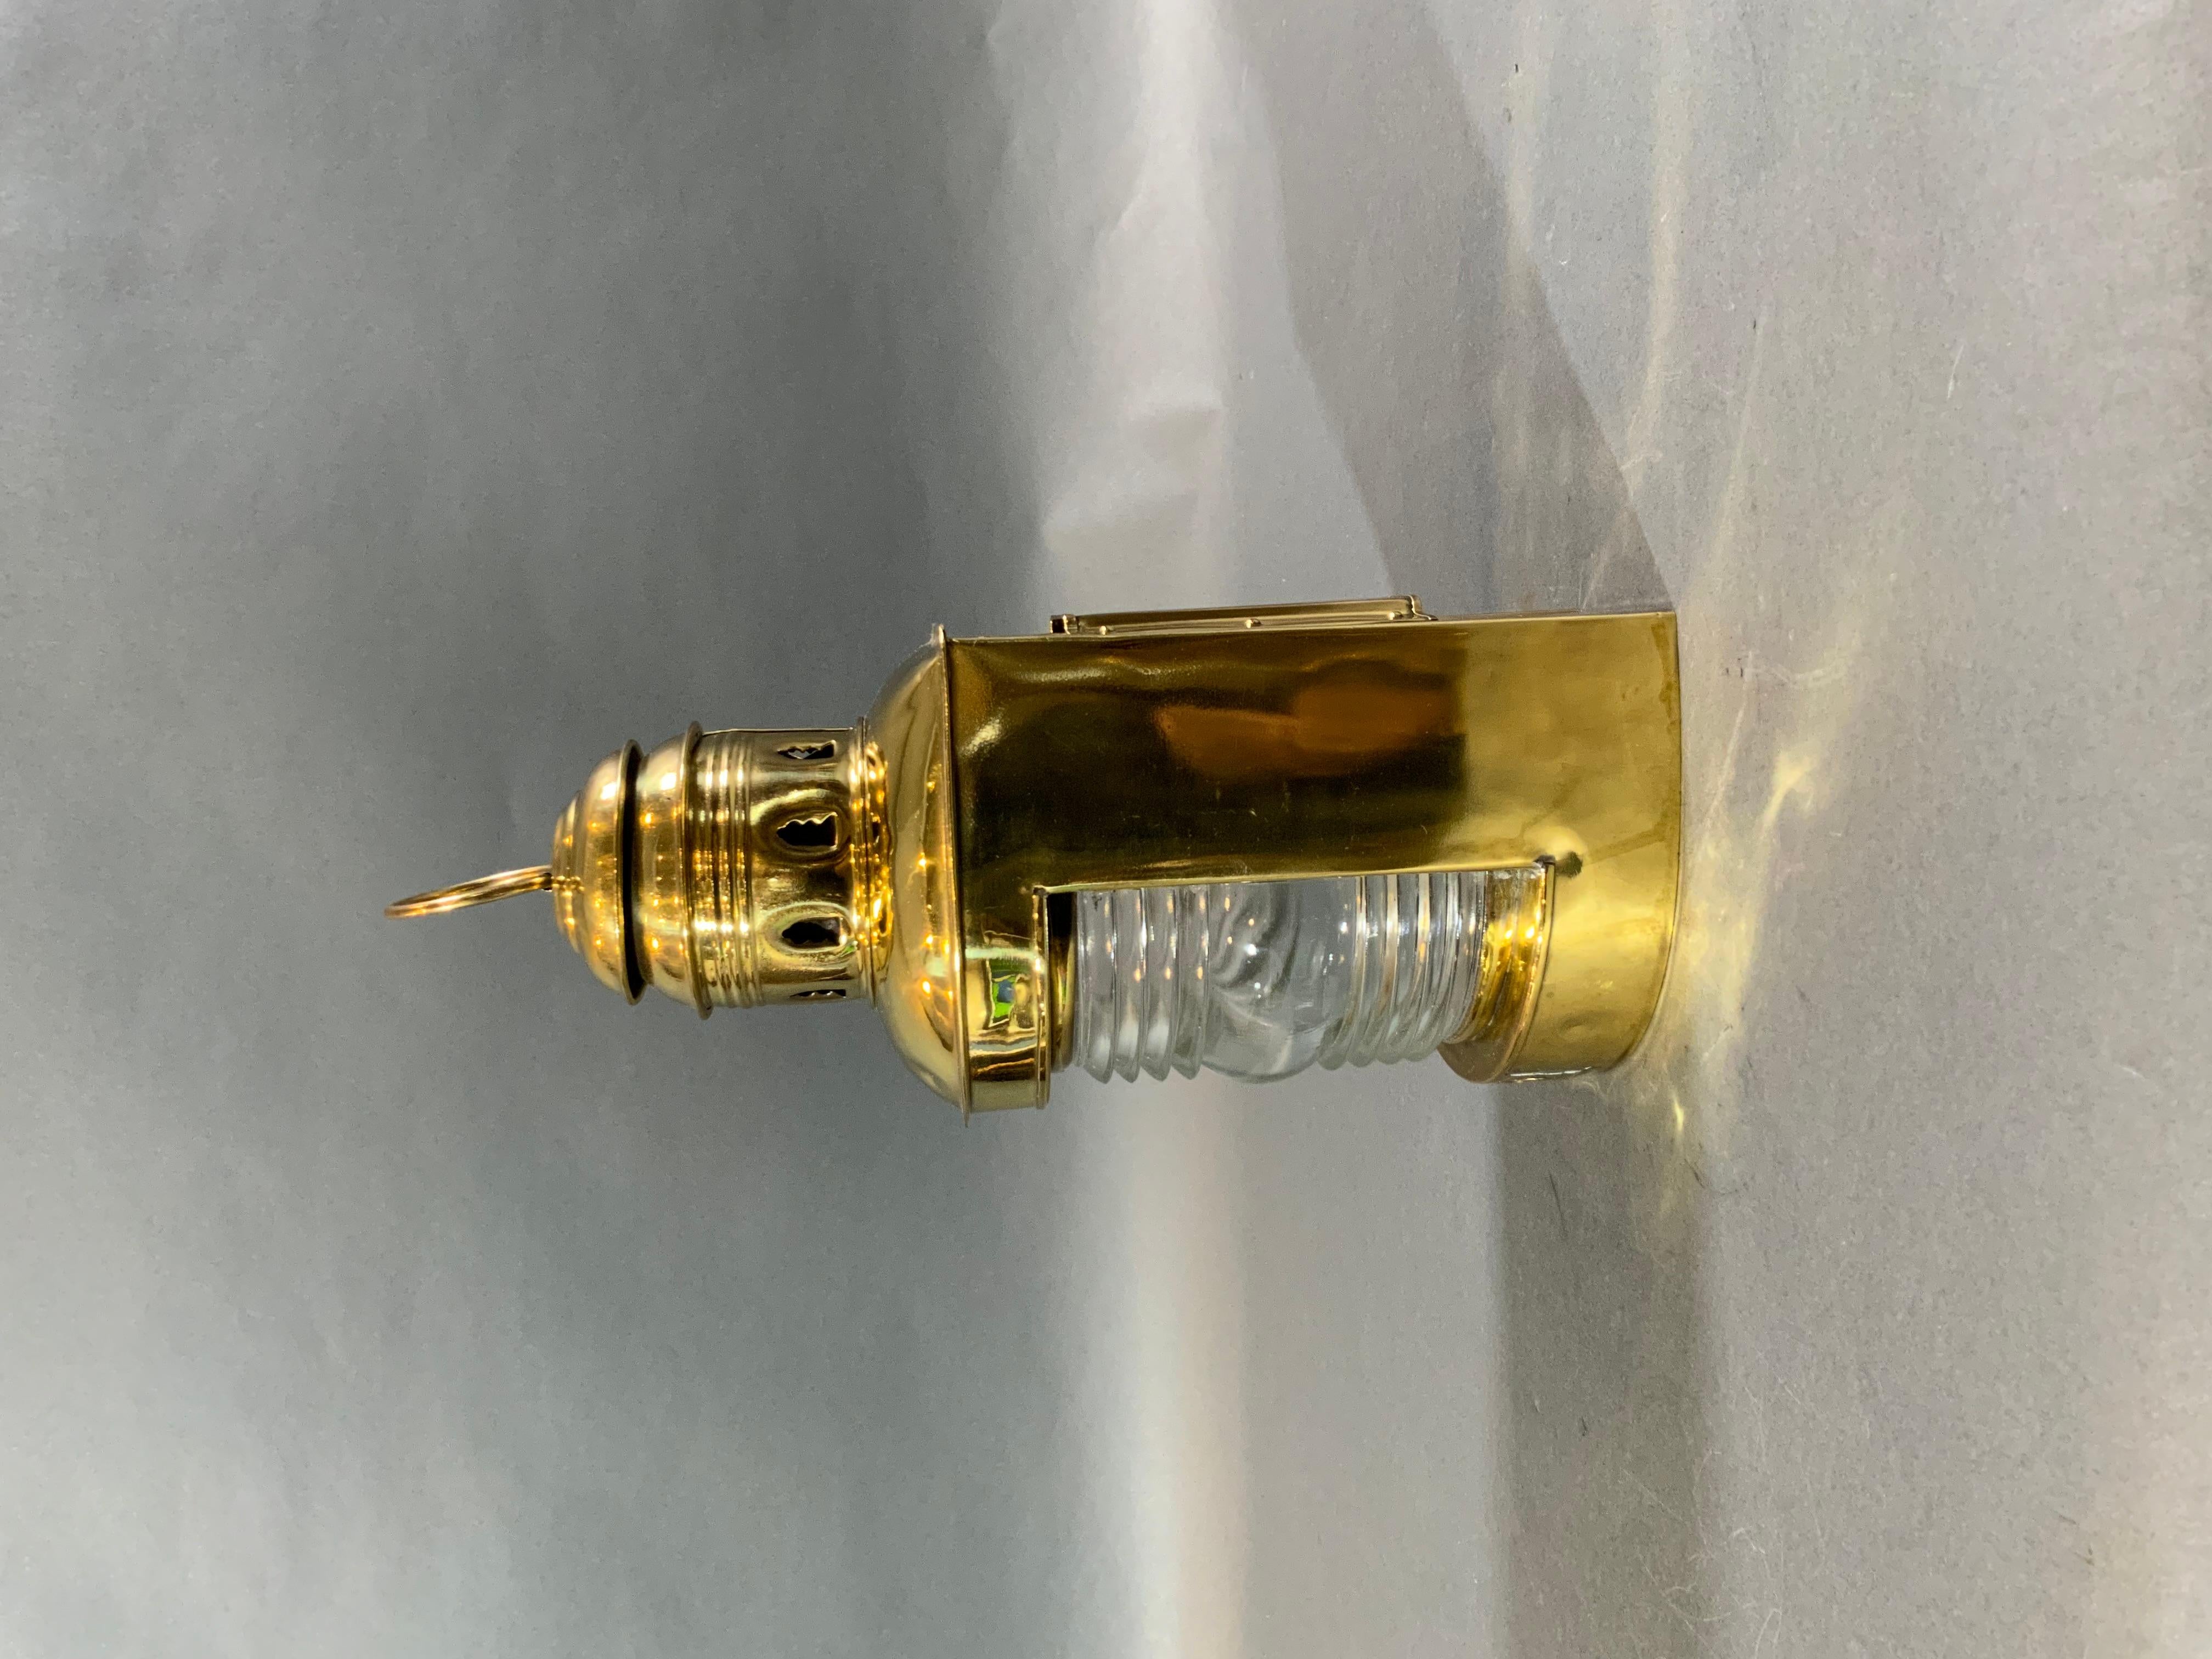 Late 19th Century Brass Bow Lantern “Hopkins” Lantern For Sale